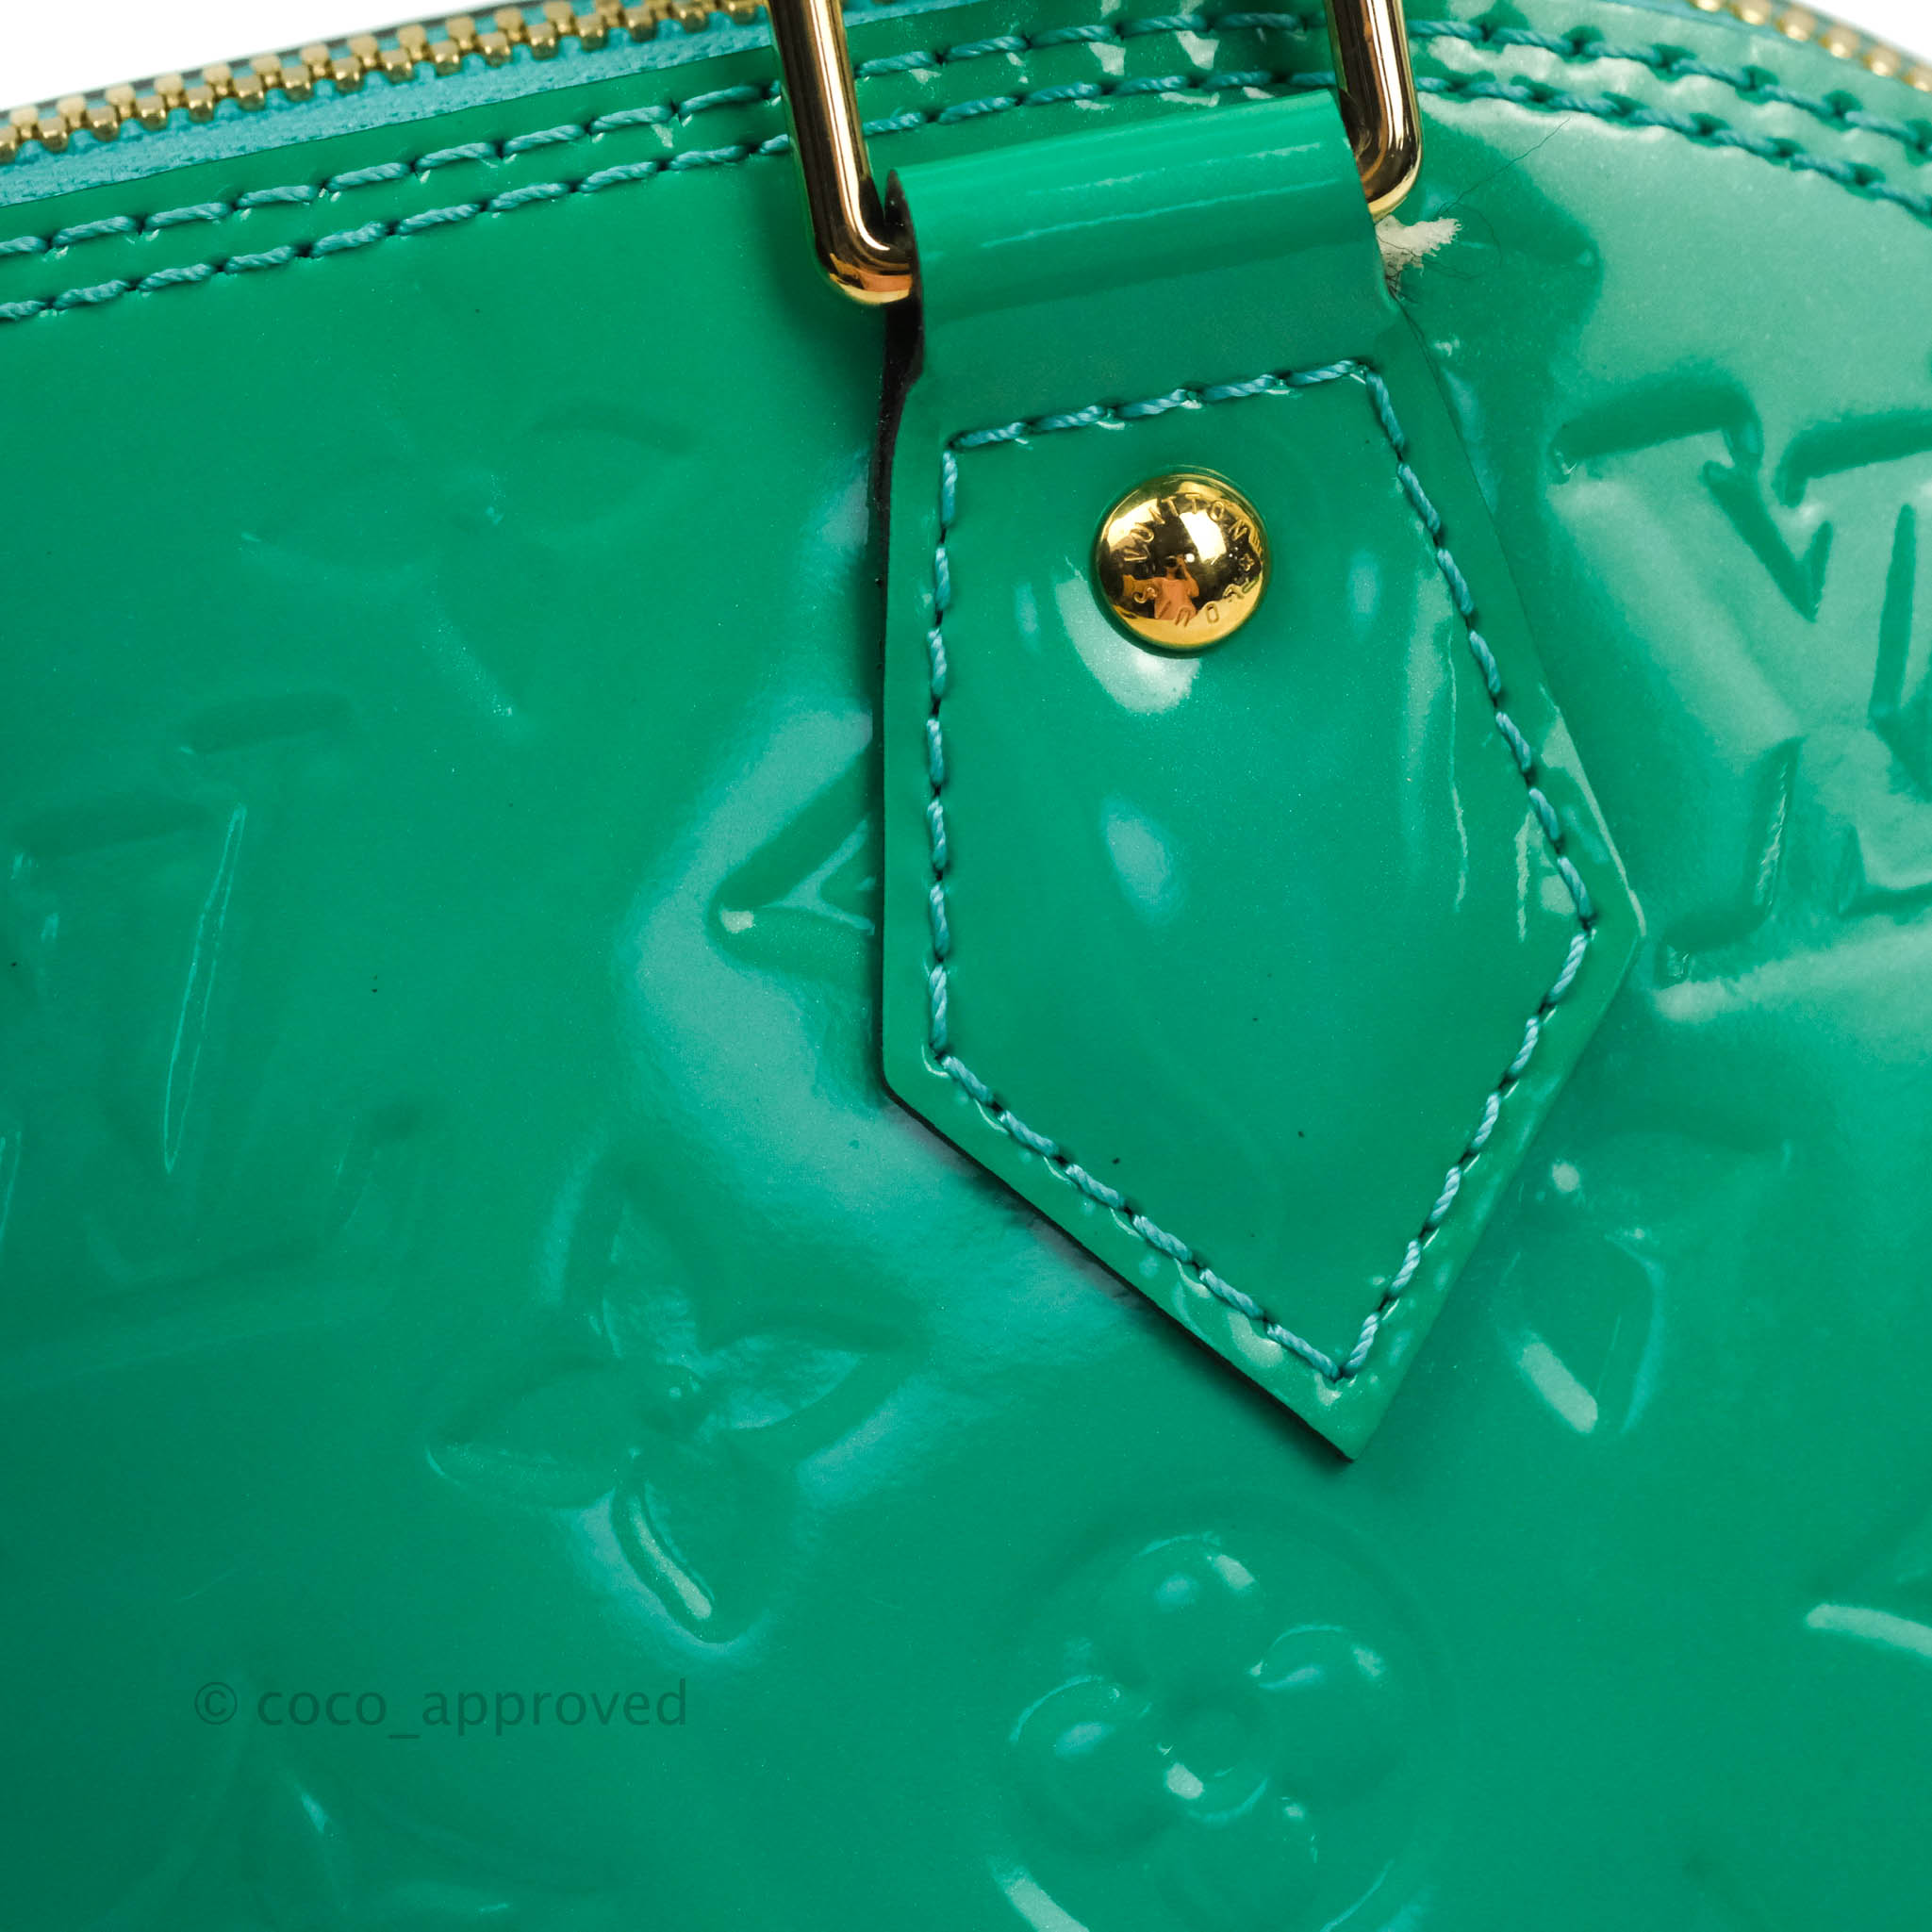 Louis Vuitton Alma Green Patent leather Handbag